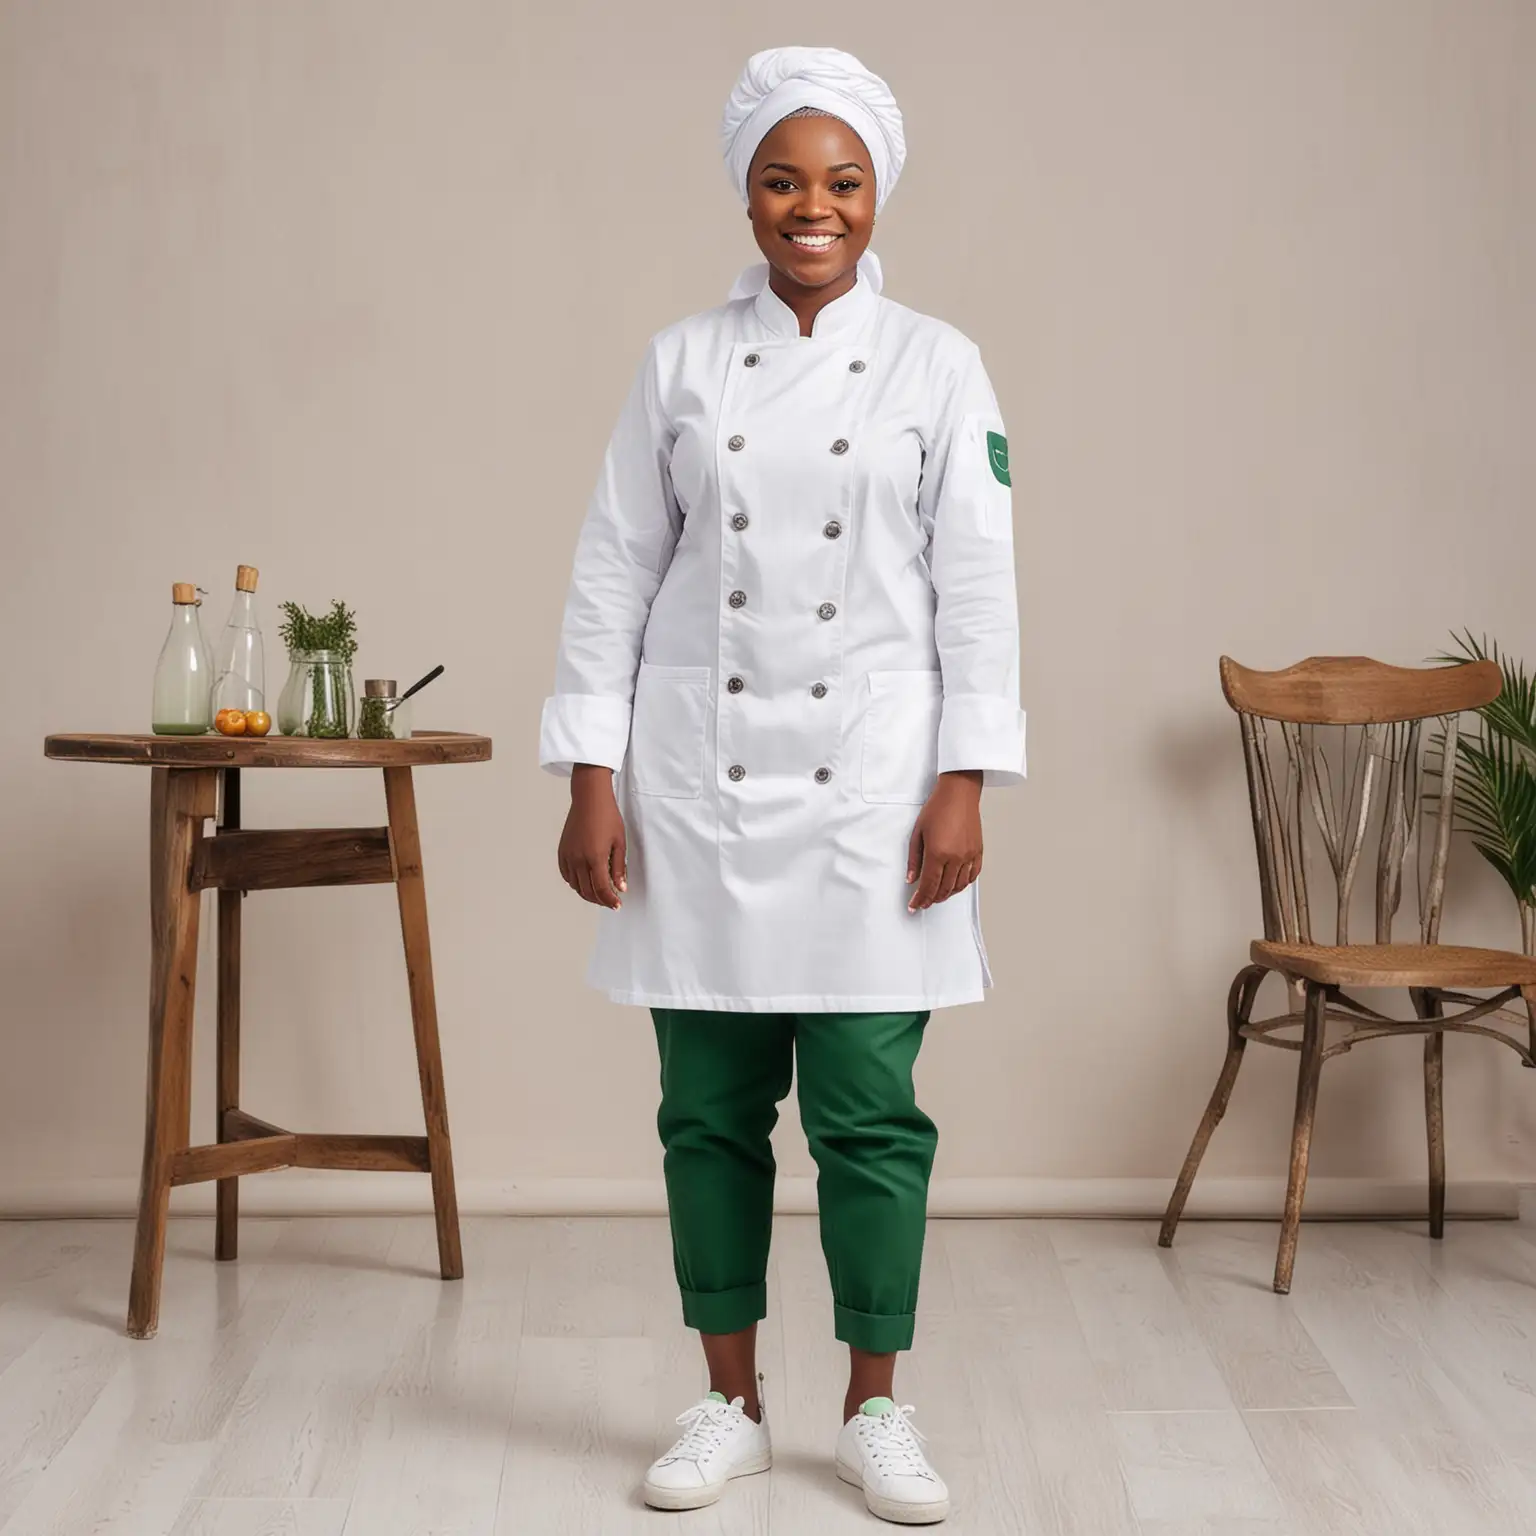 Joyful African Female Chef in Clean Green Uniform